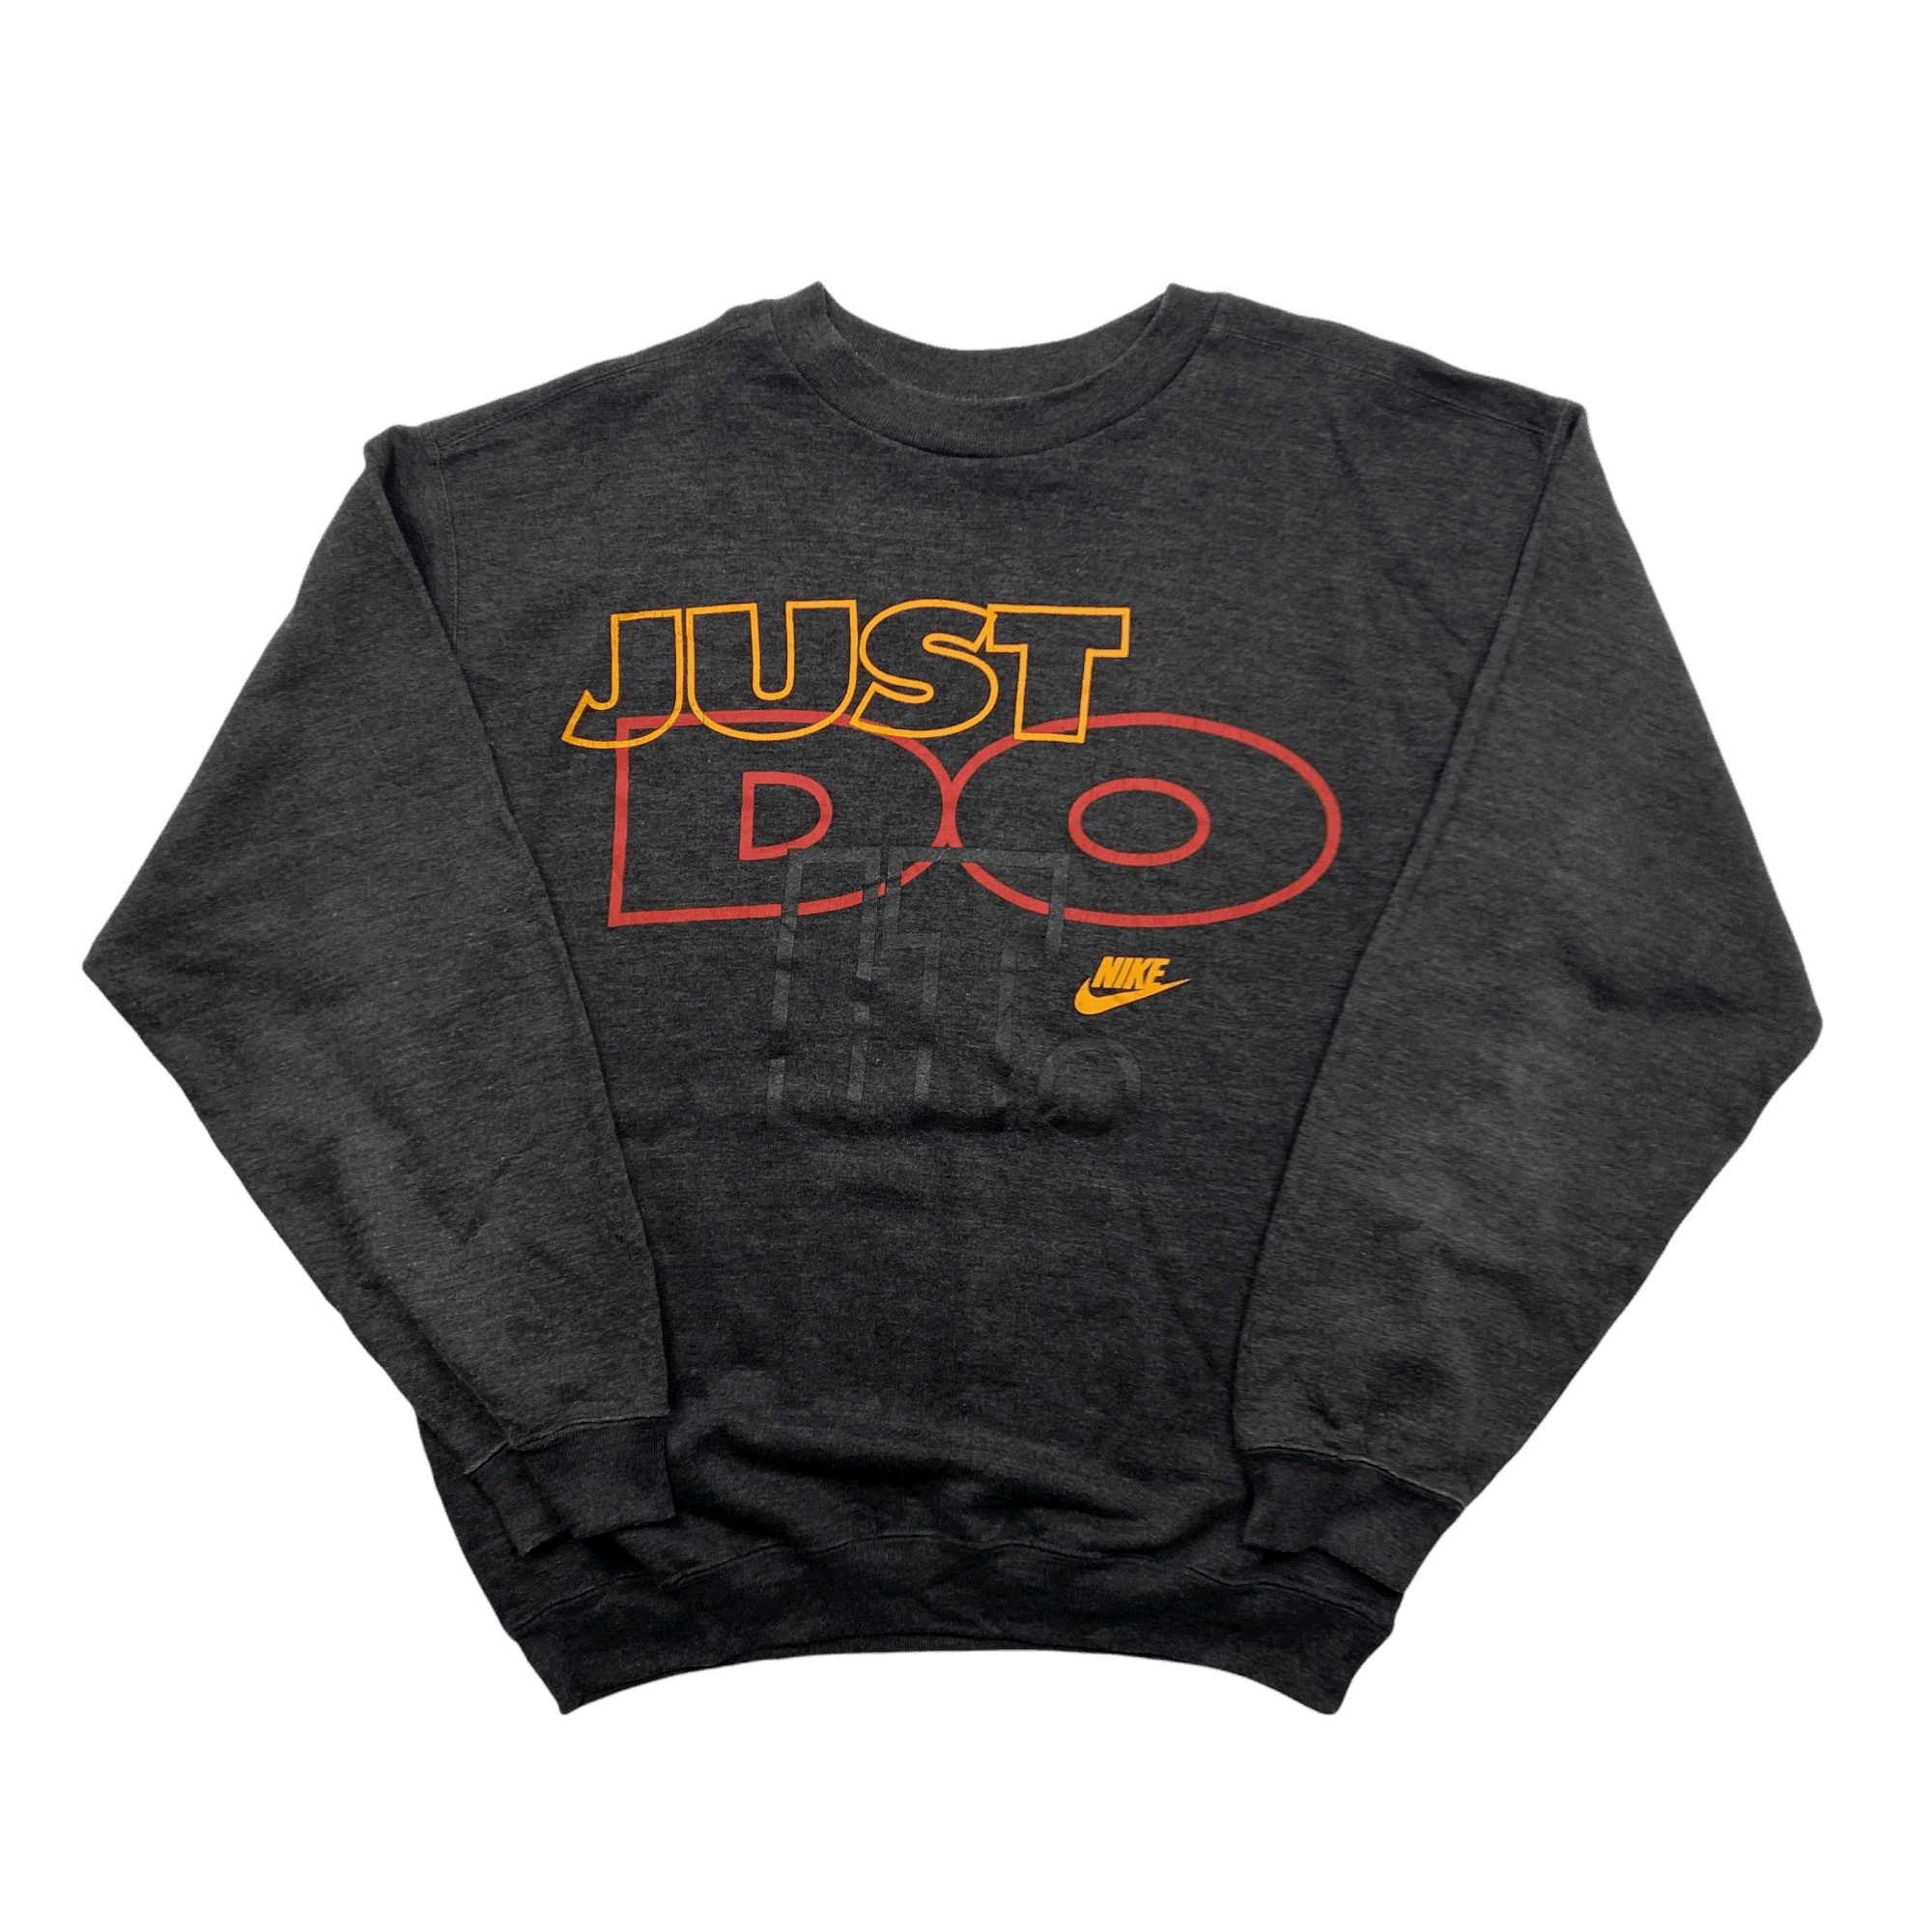 Vintage 90s Grey Nike "Just Do It" Spell-Out Sweatshirt - Medium - The Streetwear Studio